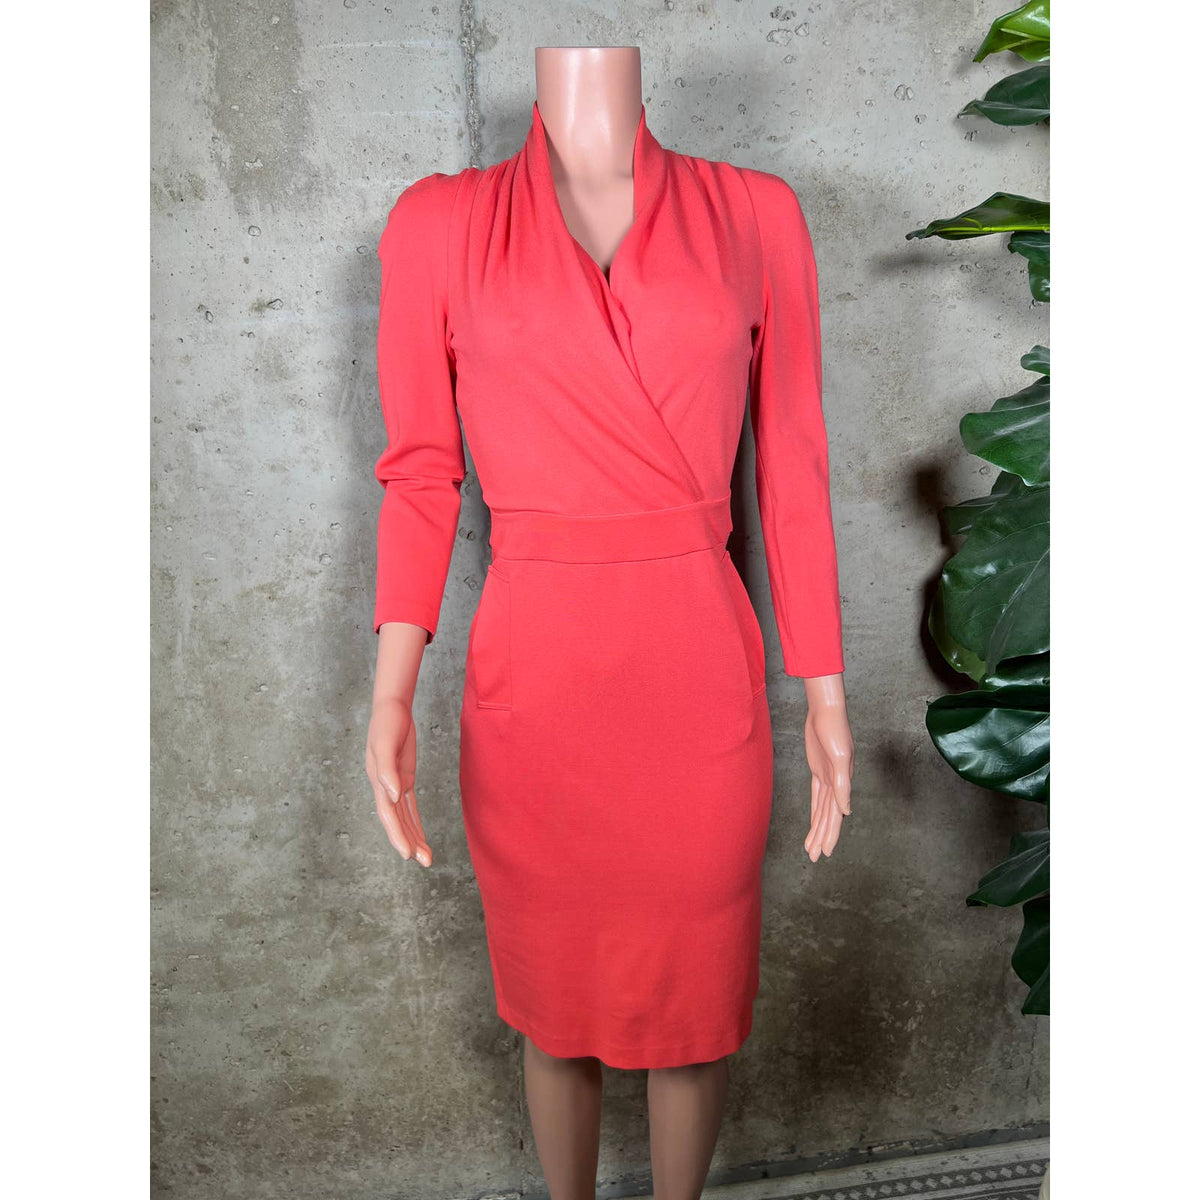 Armani Collezioni ITALY Stunning Coral  Jersey Dress Sz.2